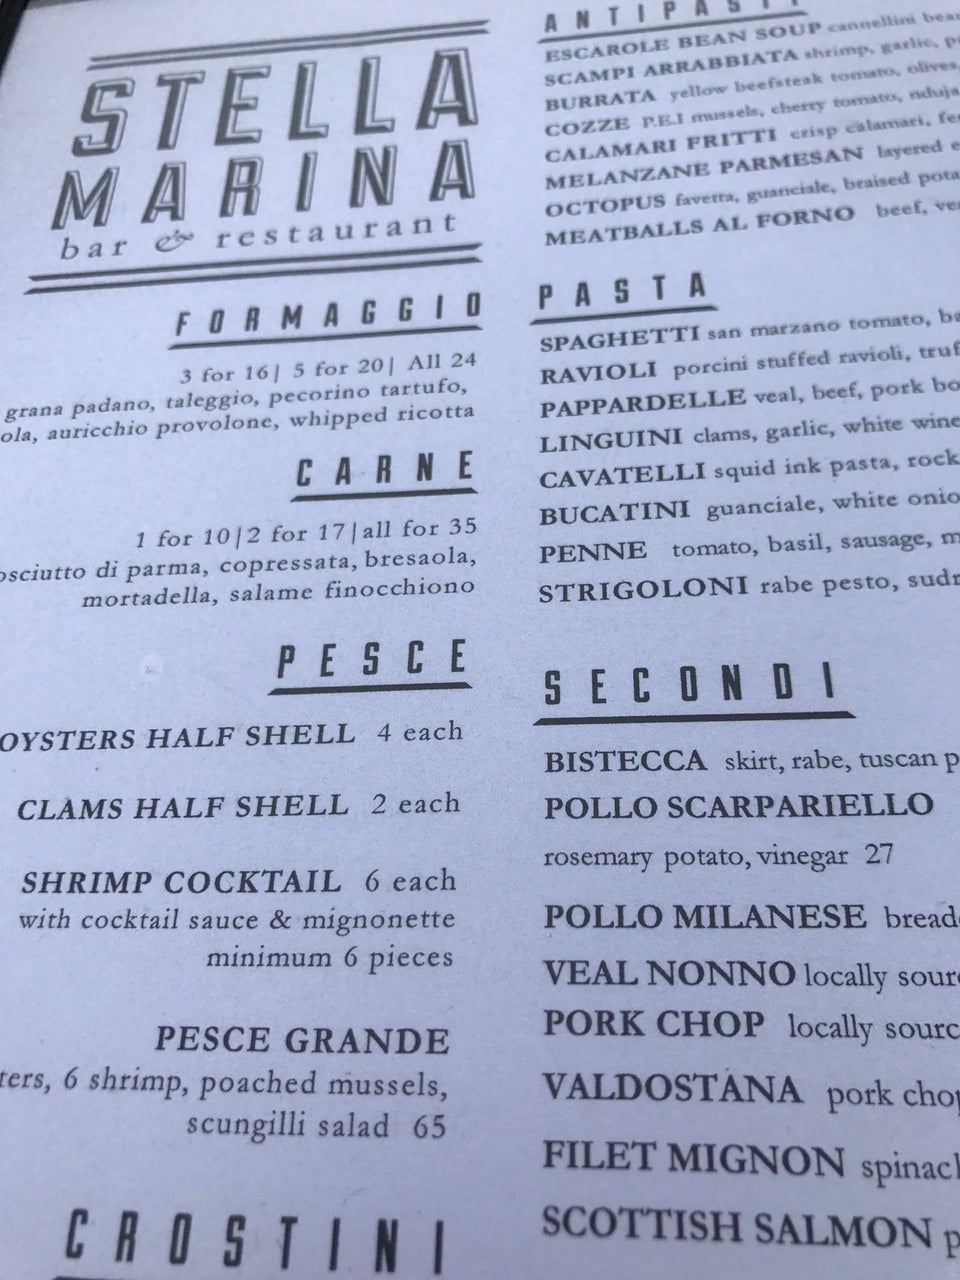 Photo of Stella Marina Bar & Restaurant